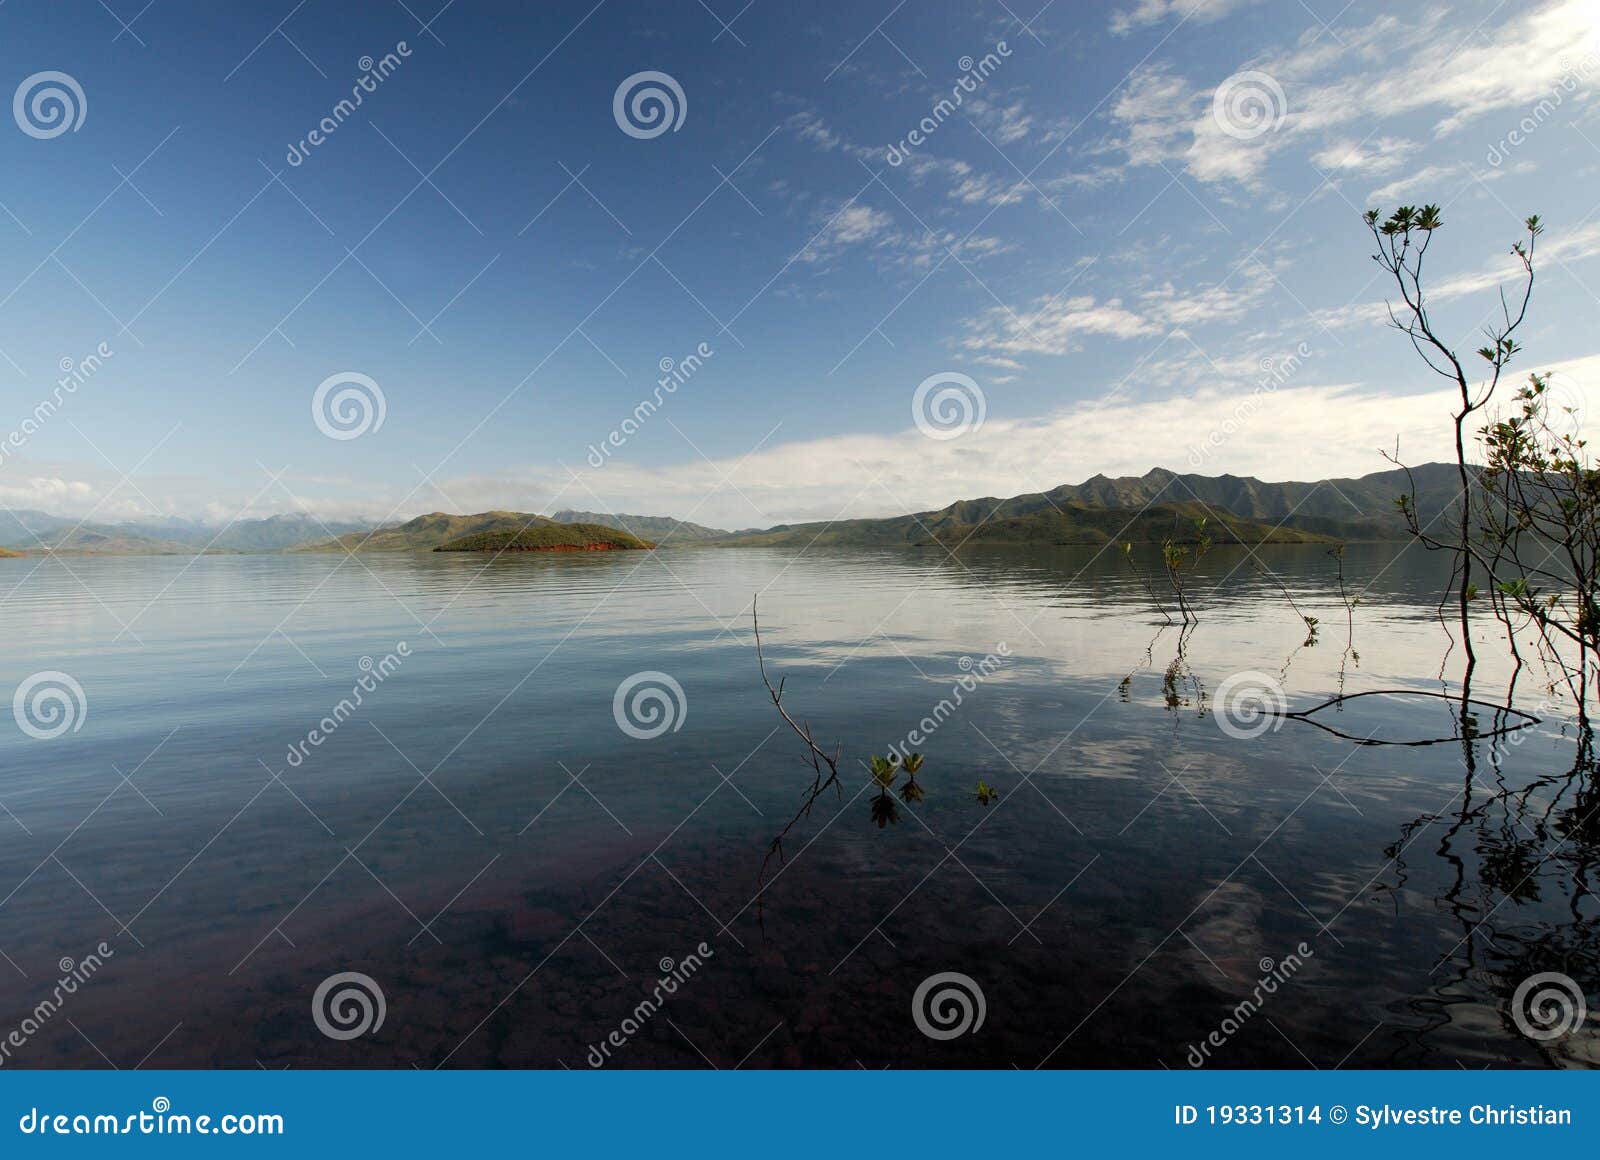 the lake of yate